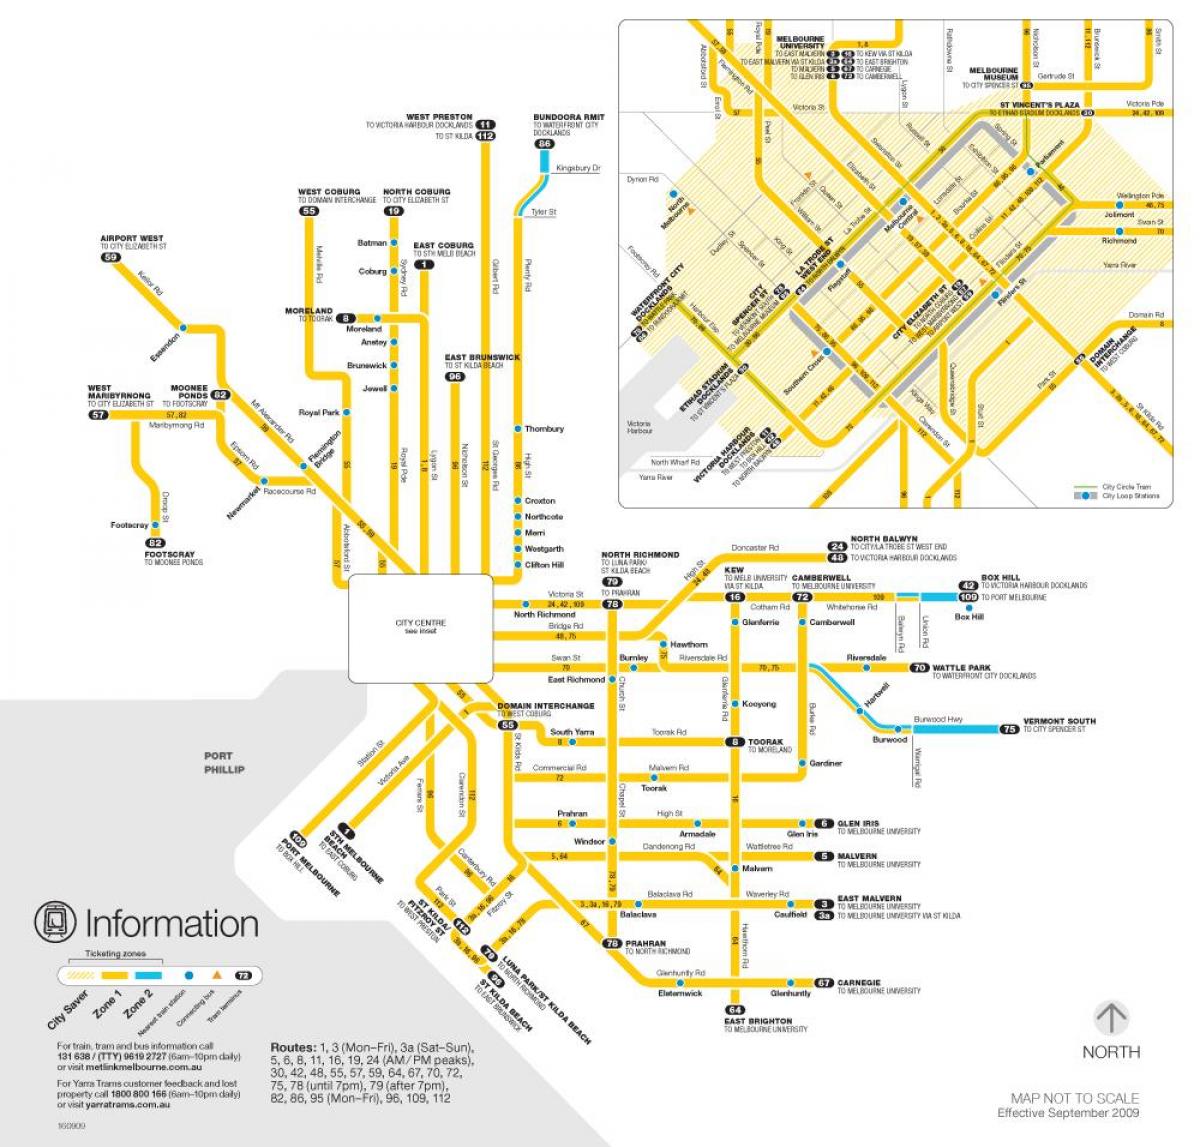 Yarra harita tramvaylar